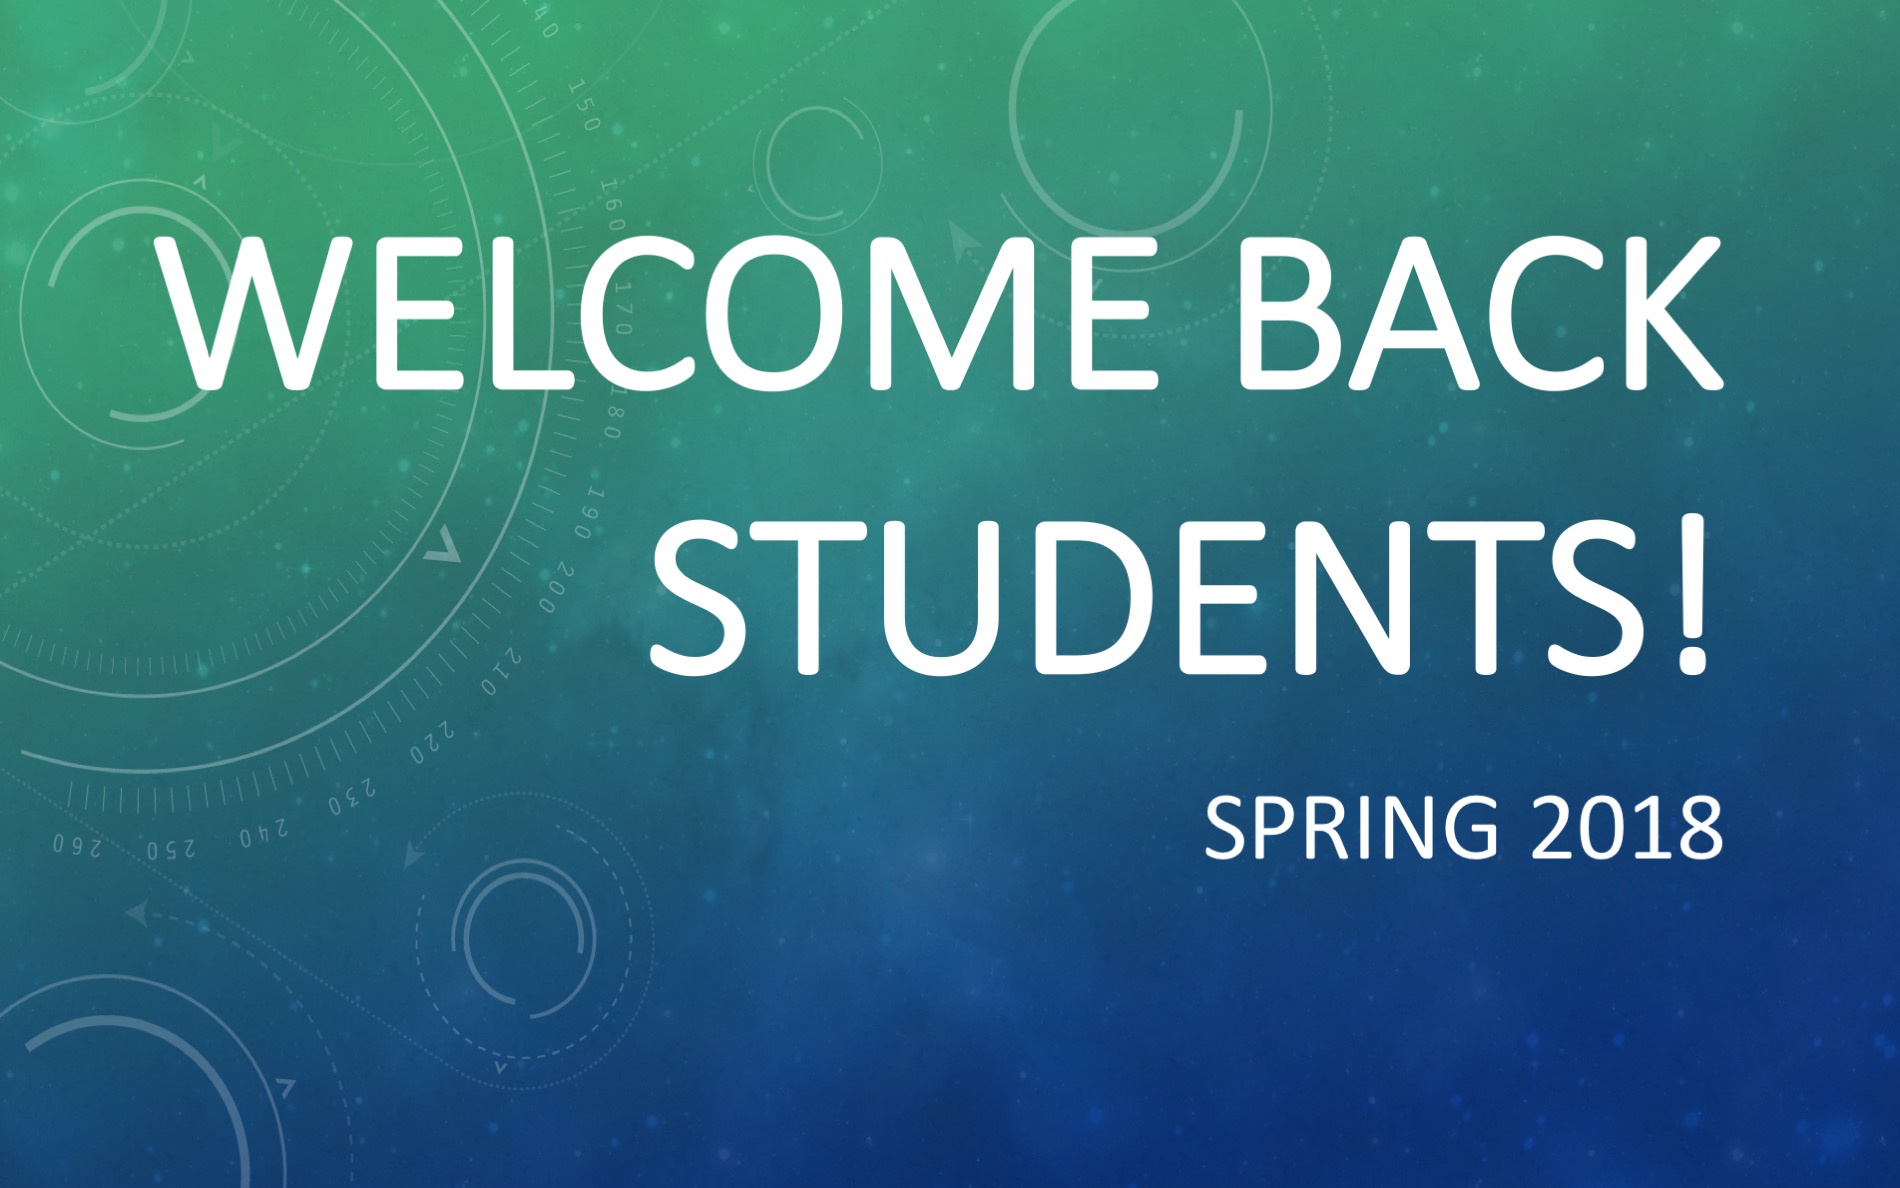 Welcome back students on aqua blue background